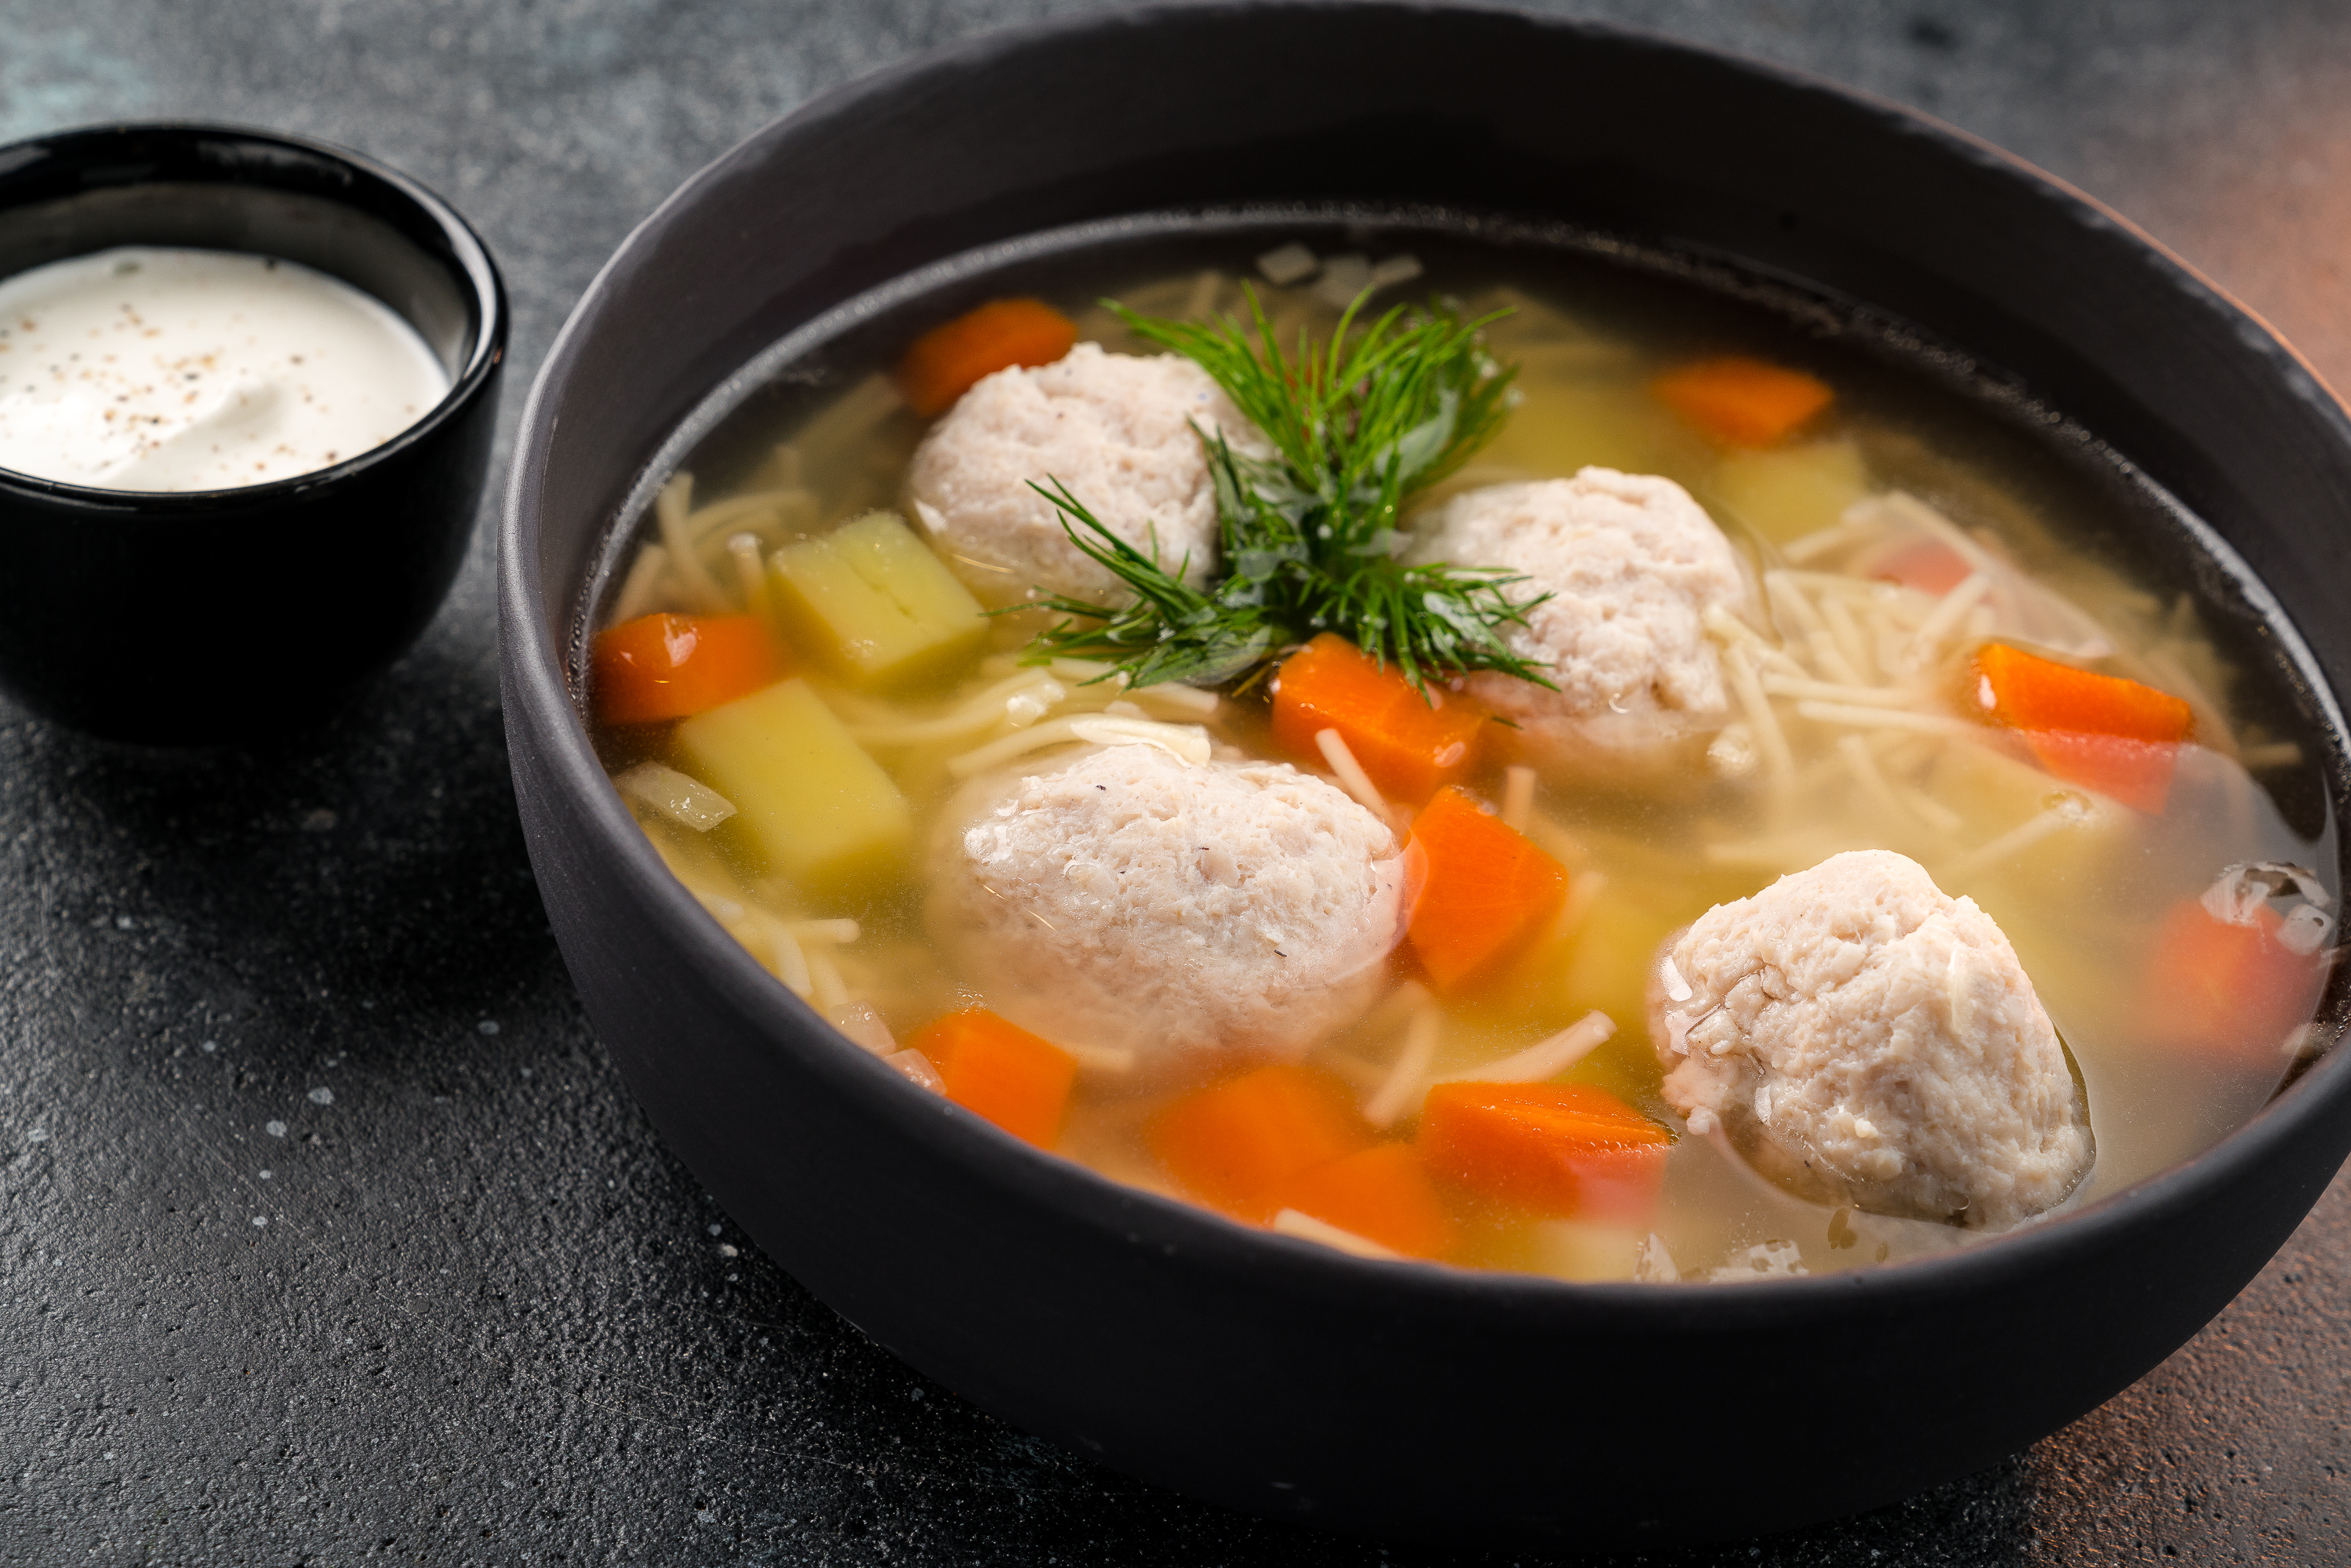 Суп с фрикадельками рисом или лапшой рецепт с фото от фоторецепт.ru